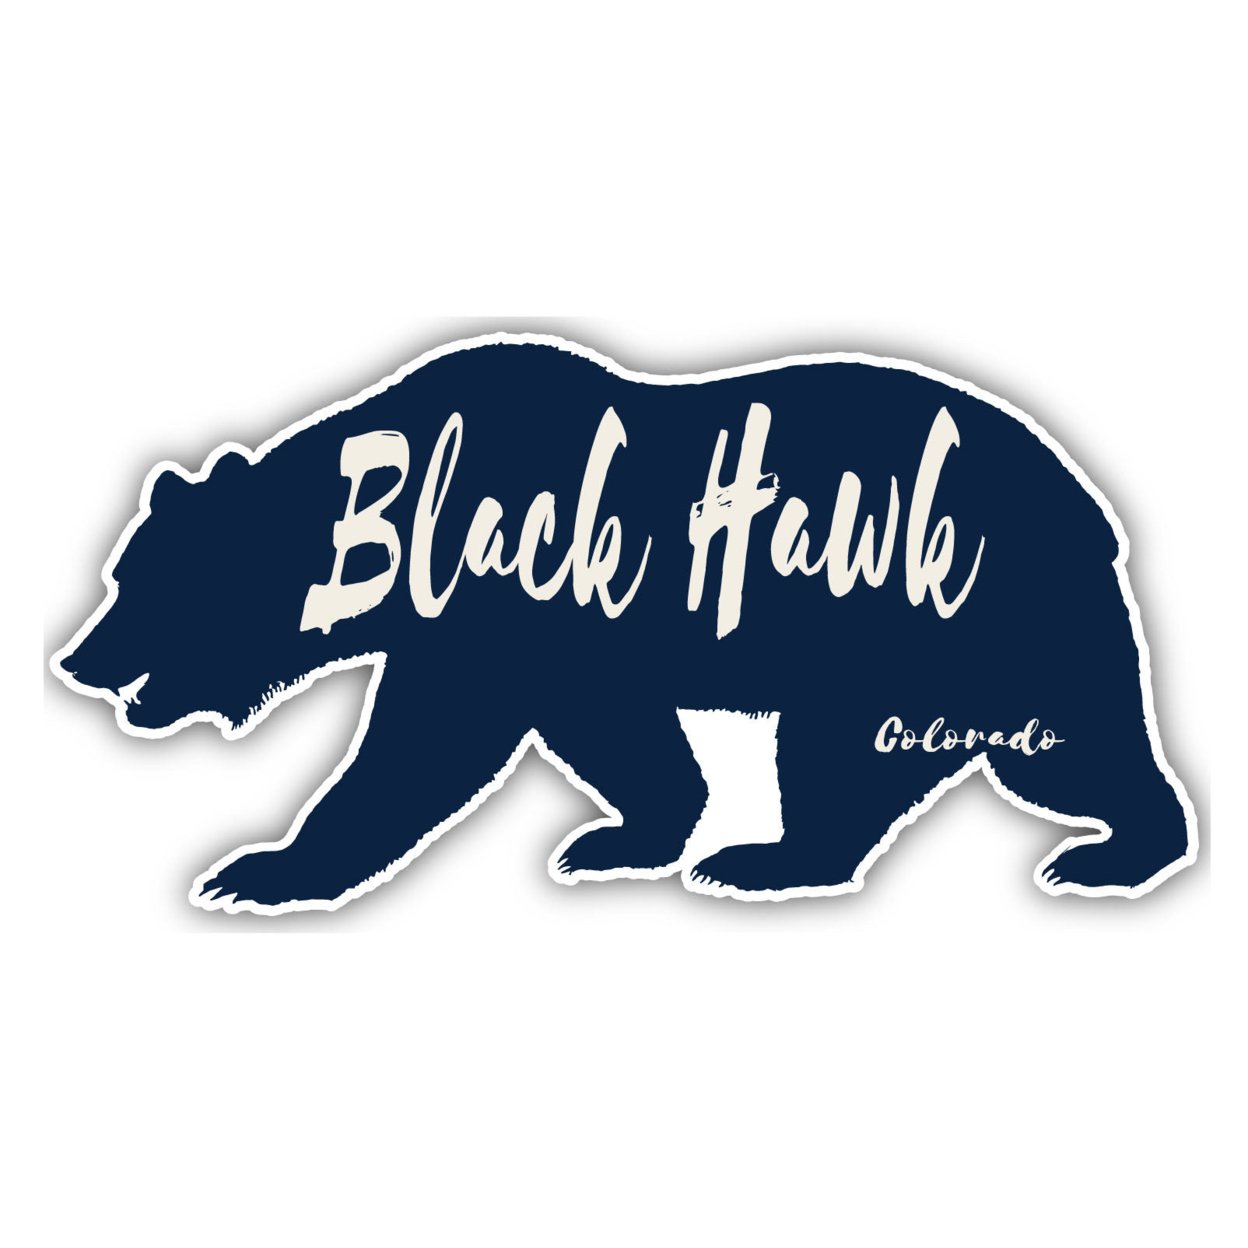 Black Hawk Colorado Souvenir Decorative Stickers (Choose Theme And Size) - 4-Pack, 6-Inch, Adventures Awaits